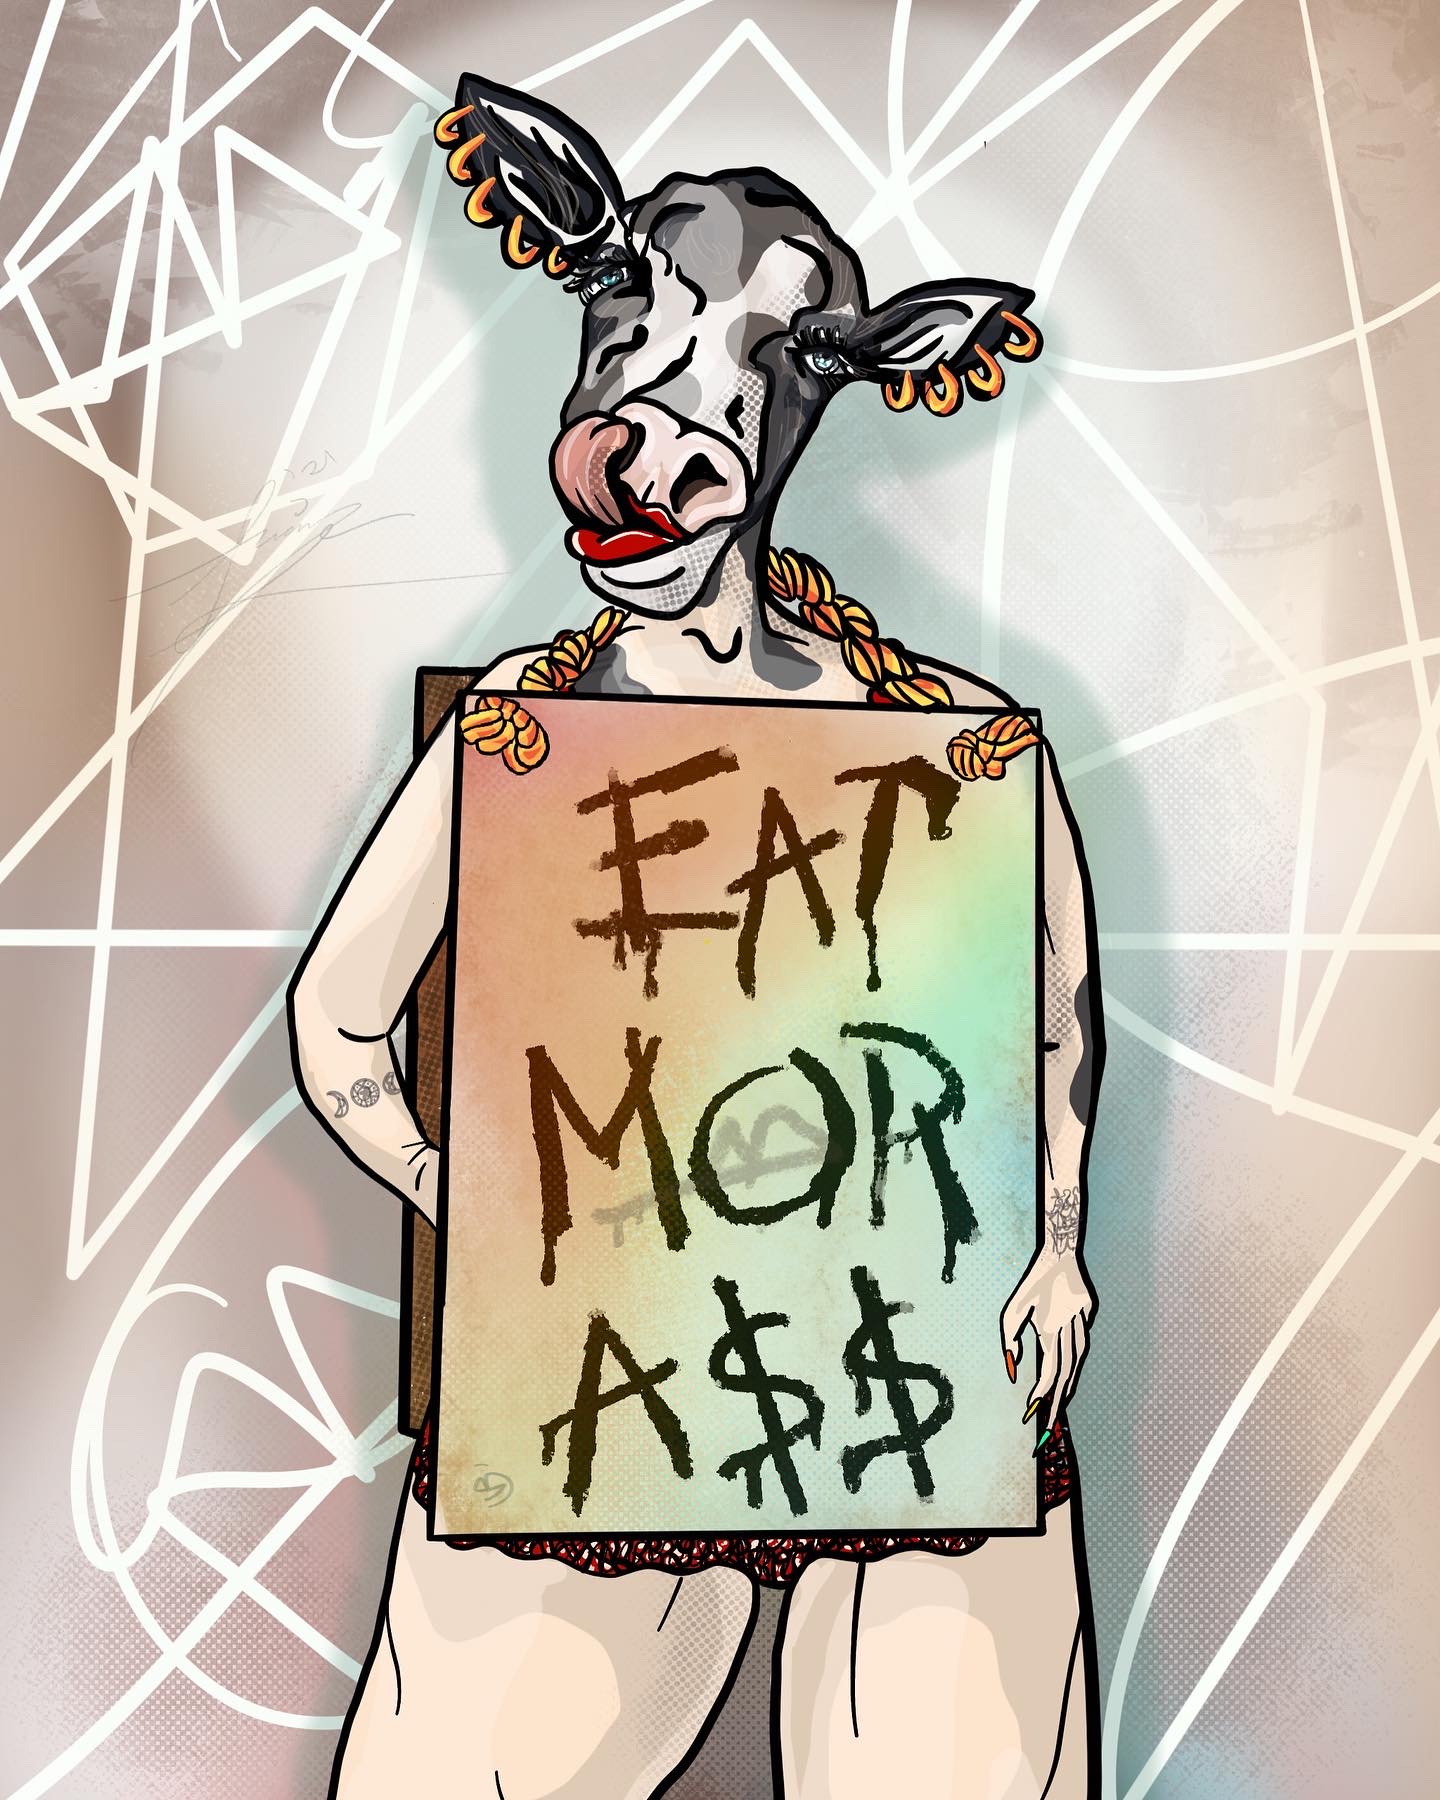 Eat Mor A$$